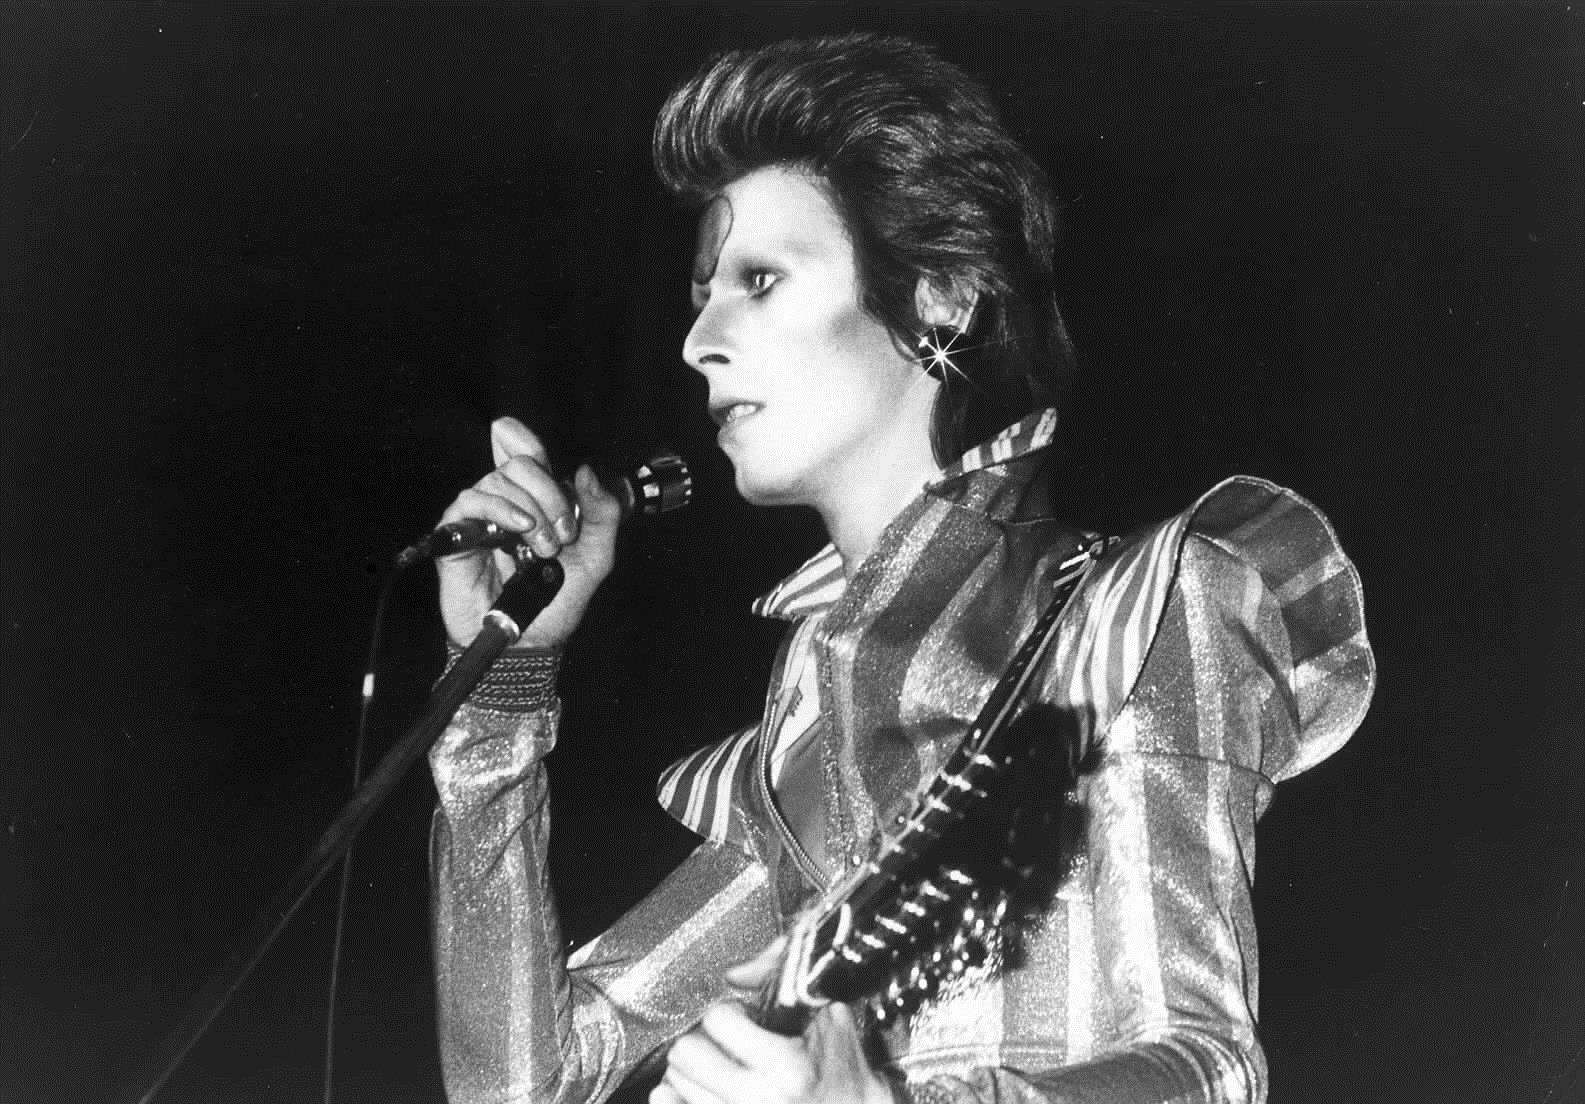 The legendary David Bowie